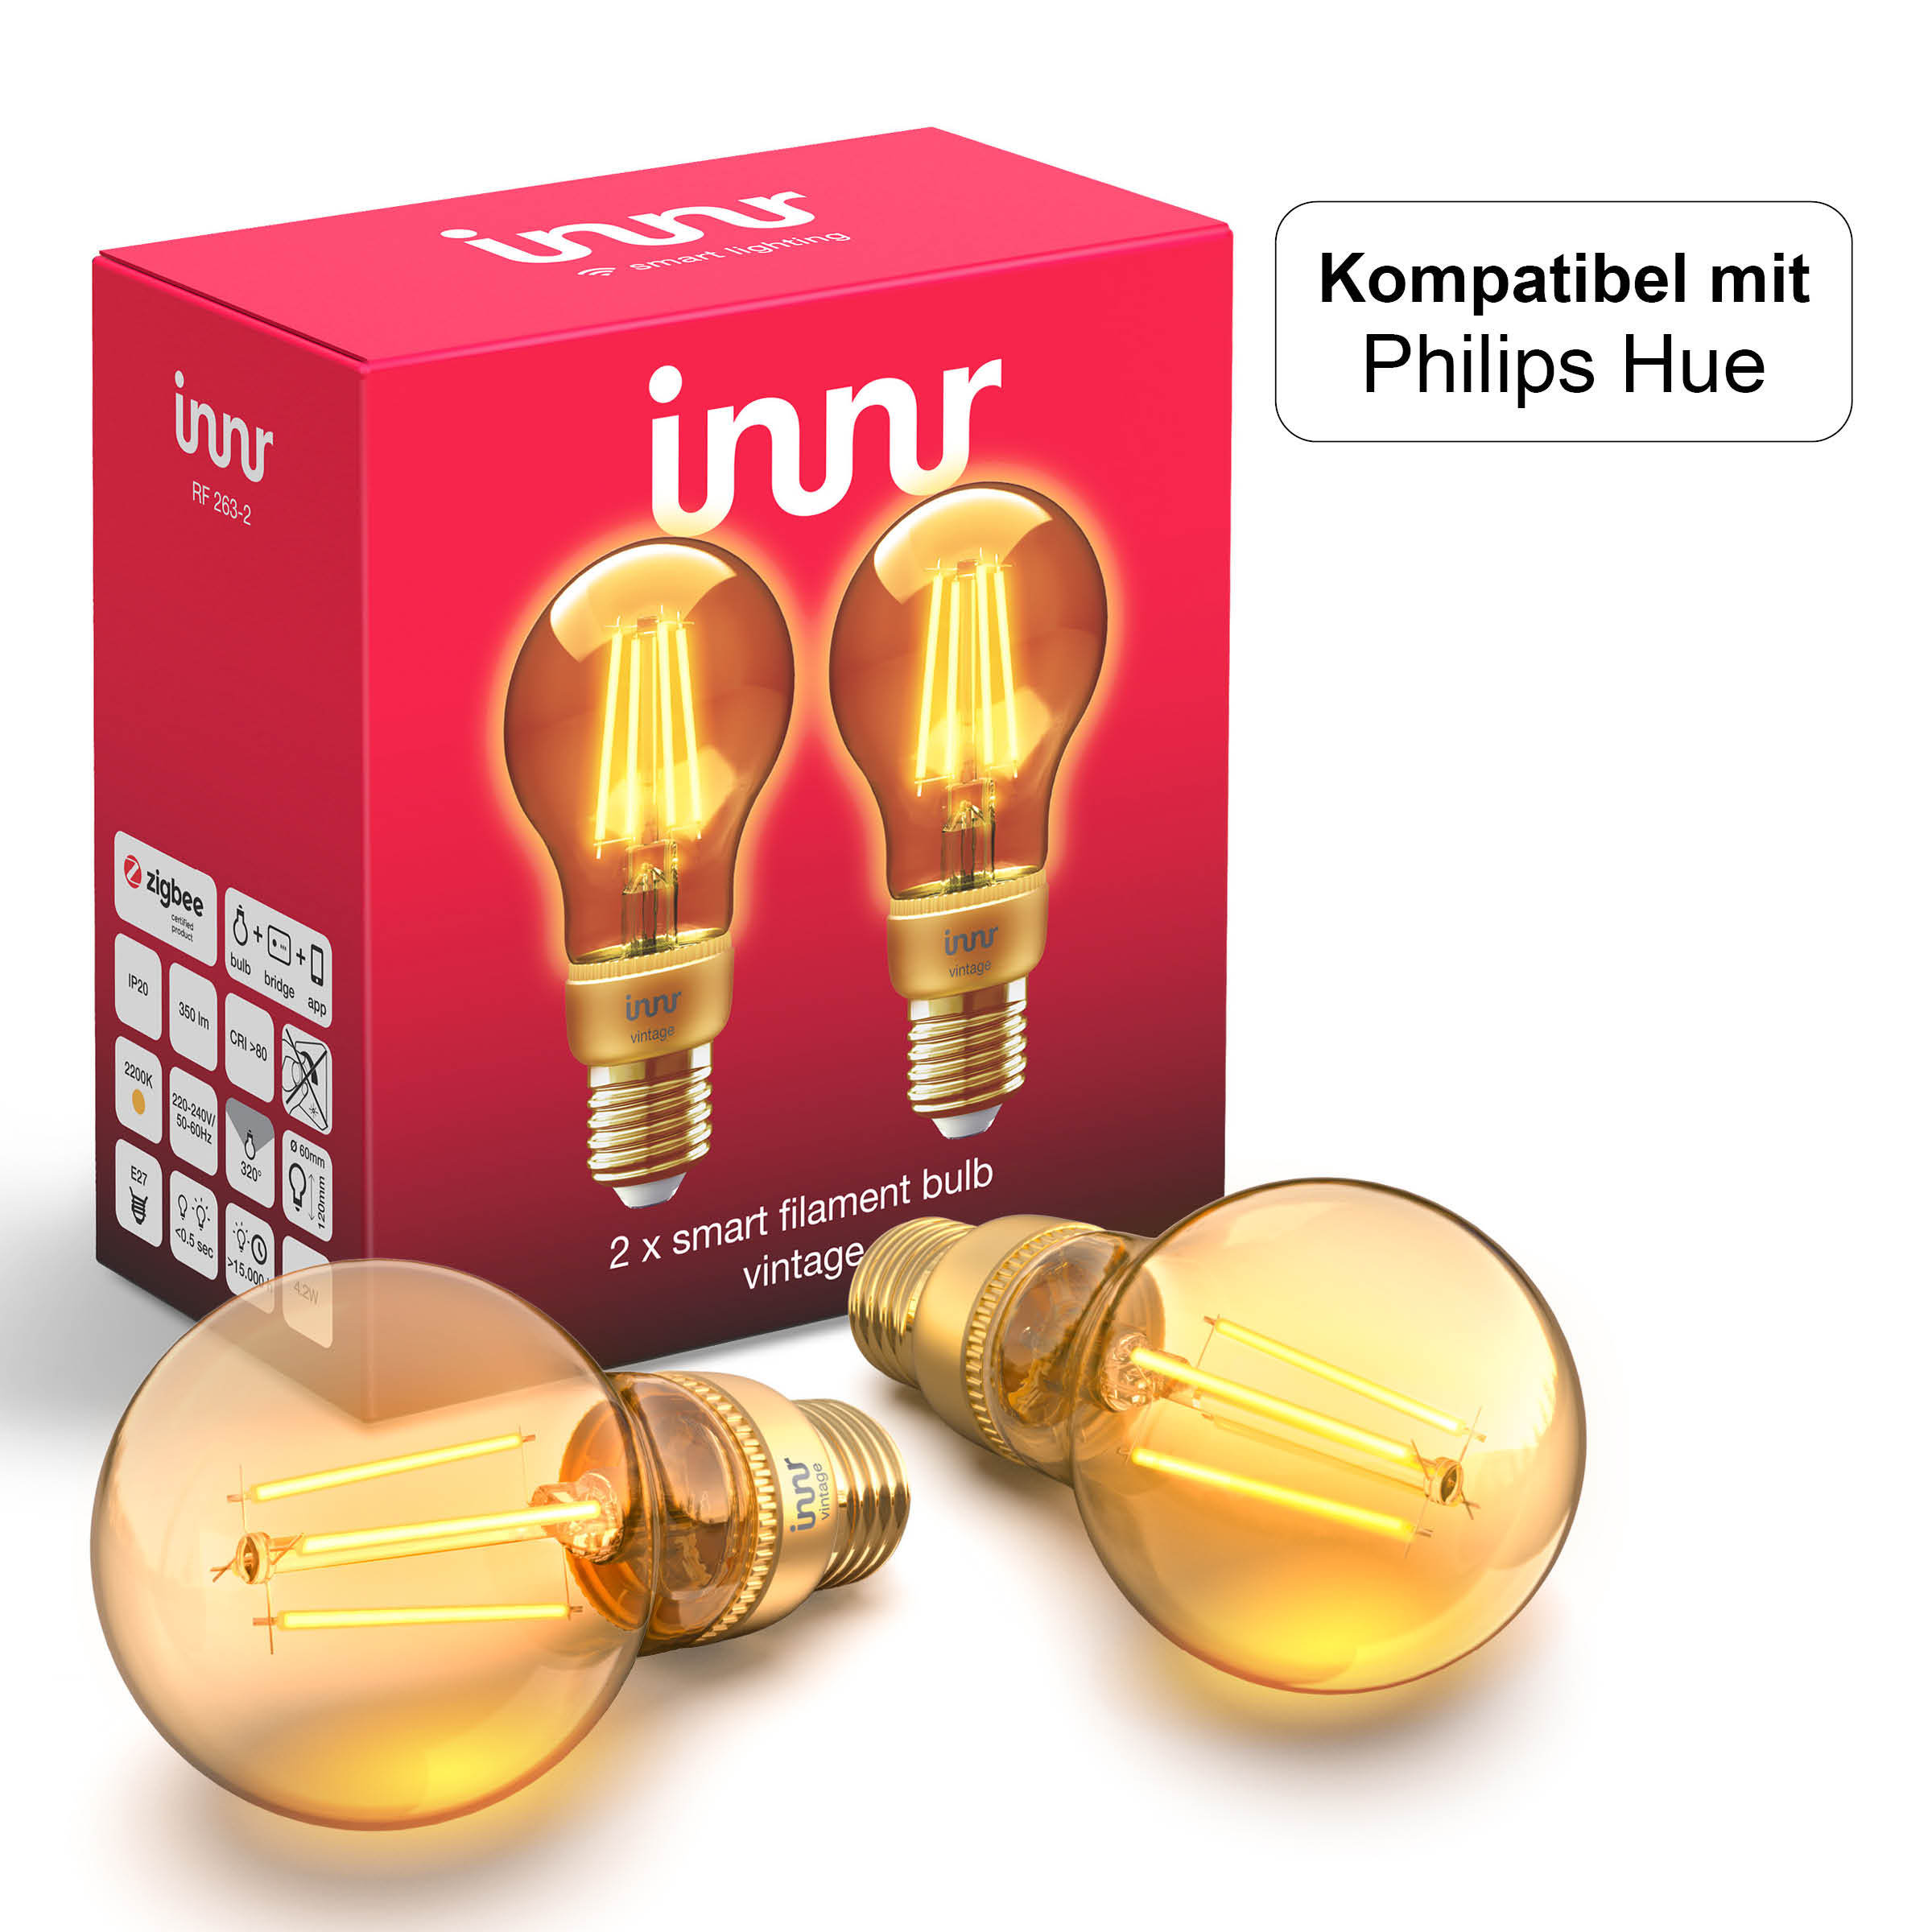 mit 2-pack LED, Philips INNR Hue Lampe Bulb, RF Kompatibel 2200K Vintage Alexa, Zigbee Smart LED & 263-2 Filament